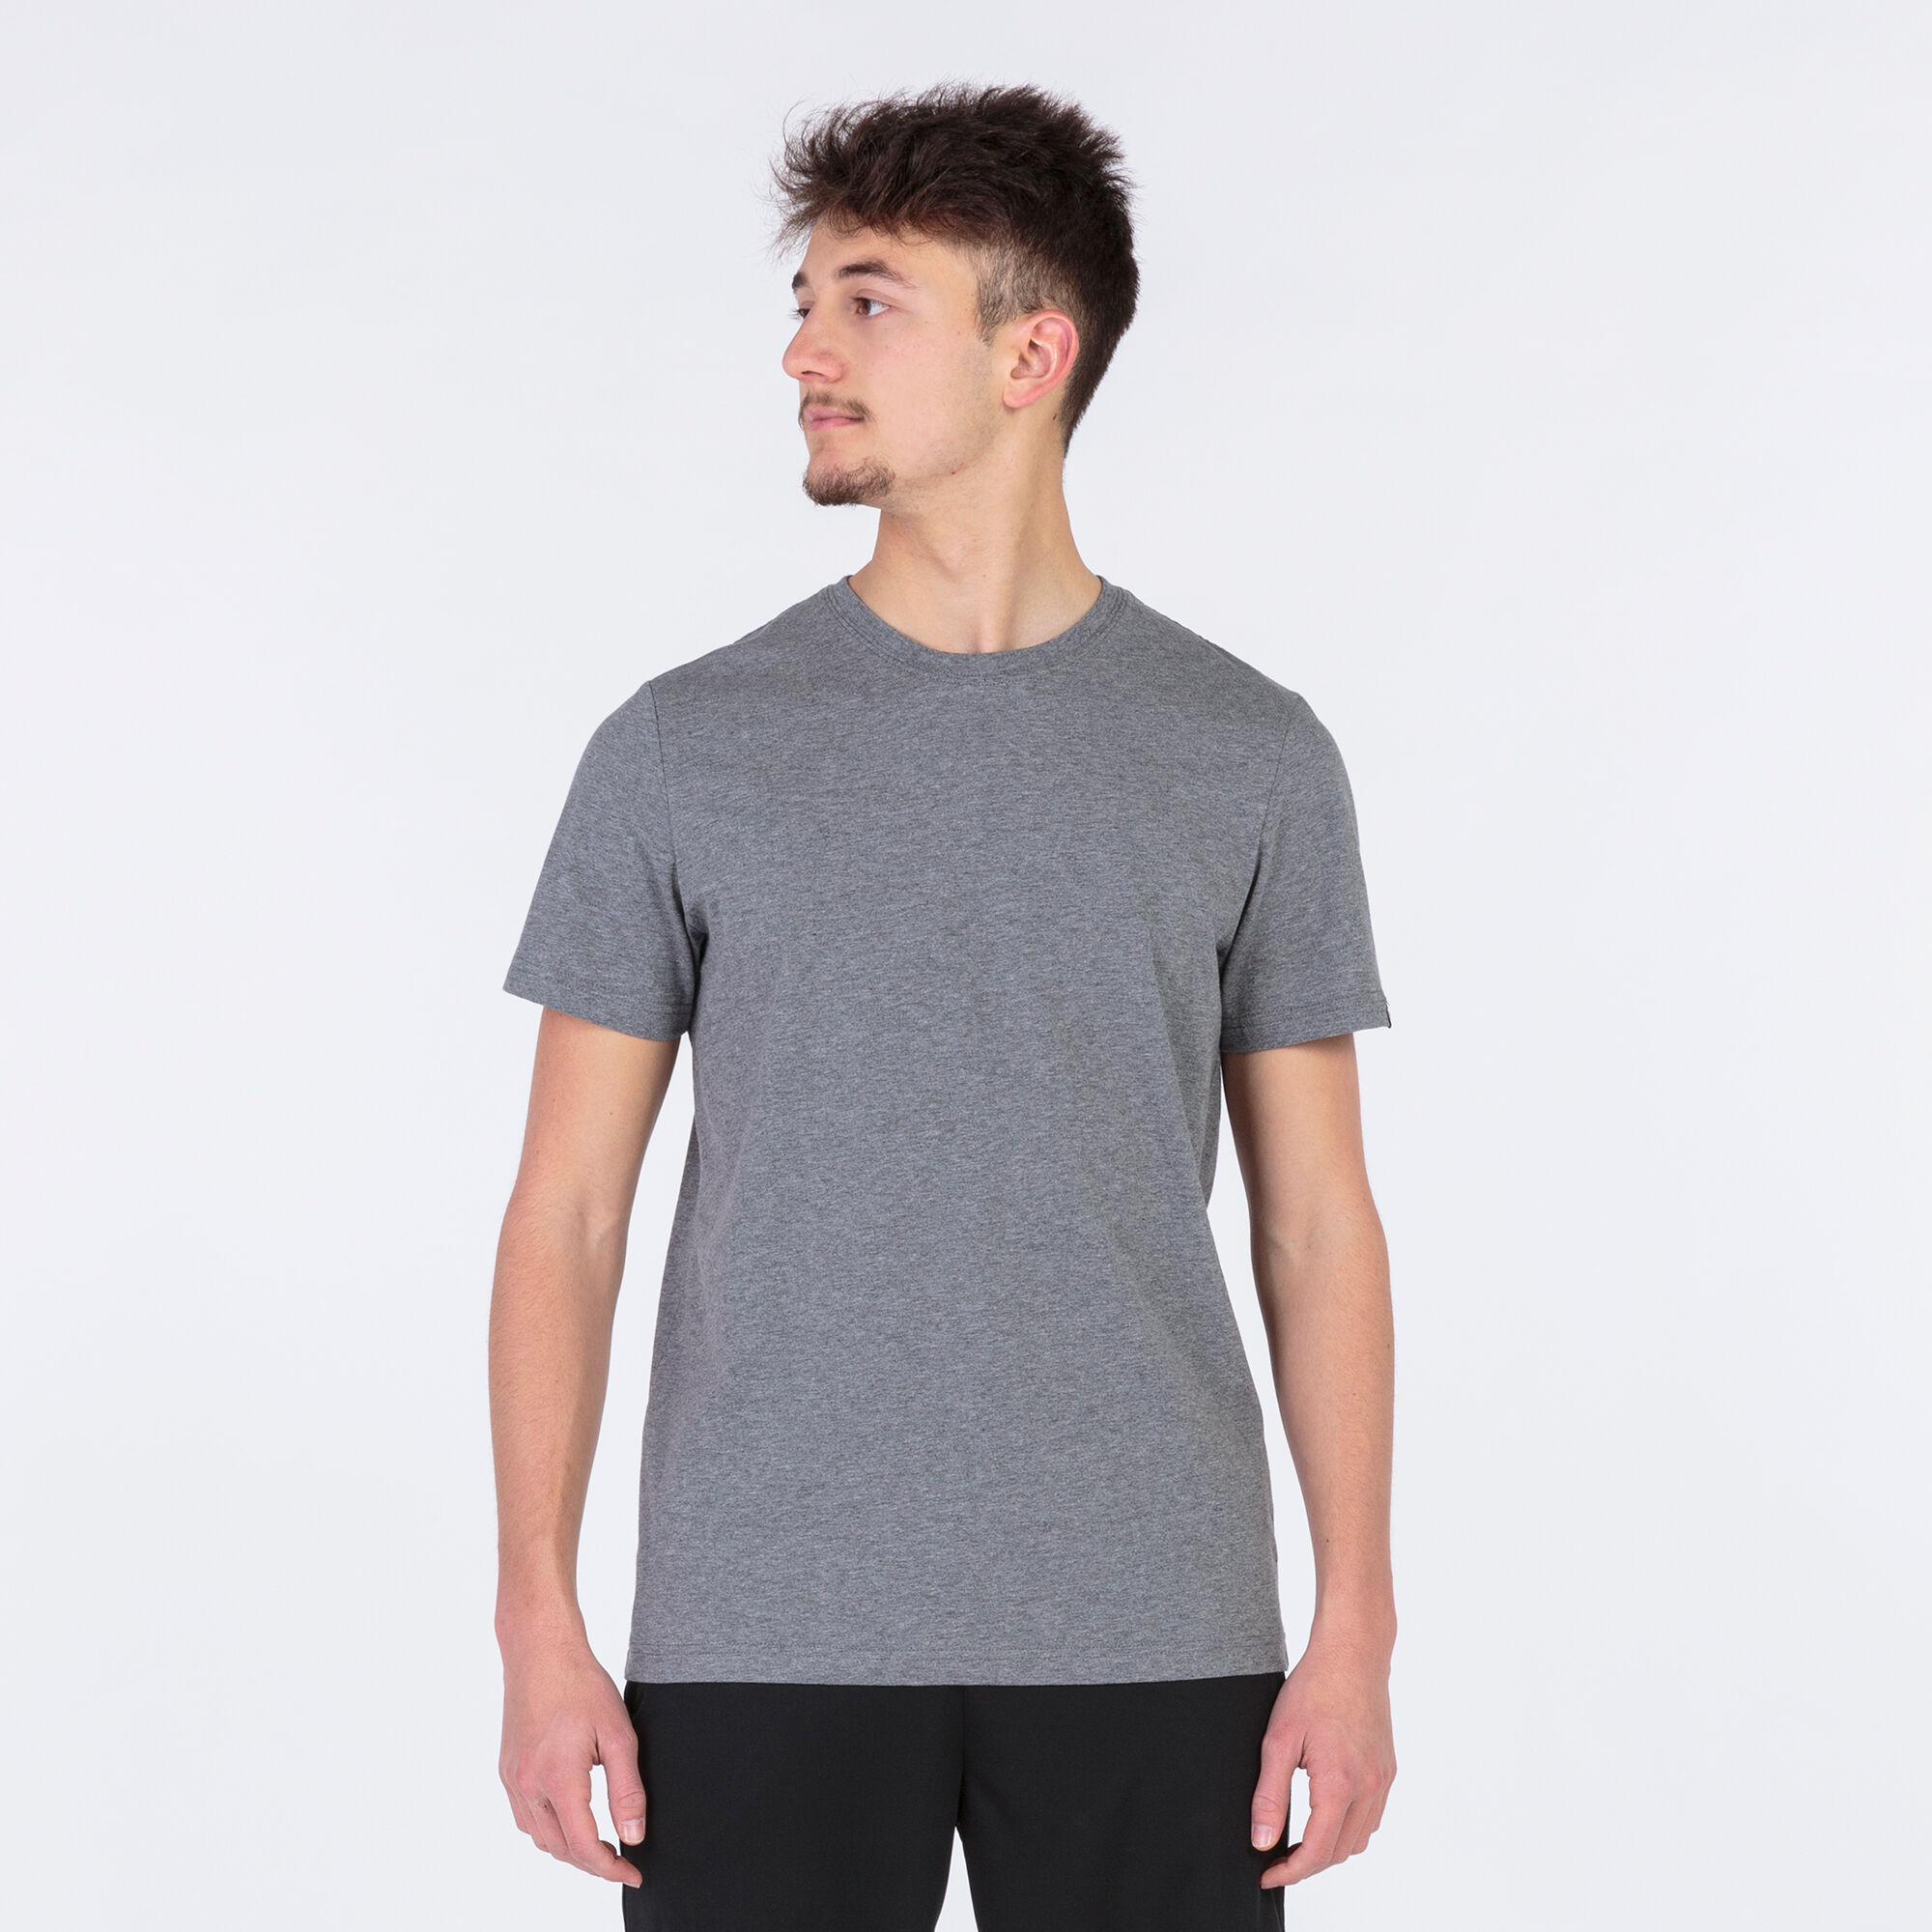 Camiseta manga corta hombre Desert gris melange